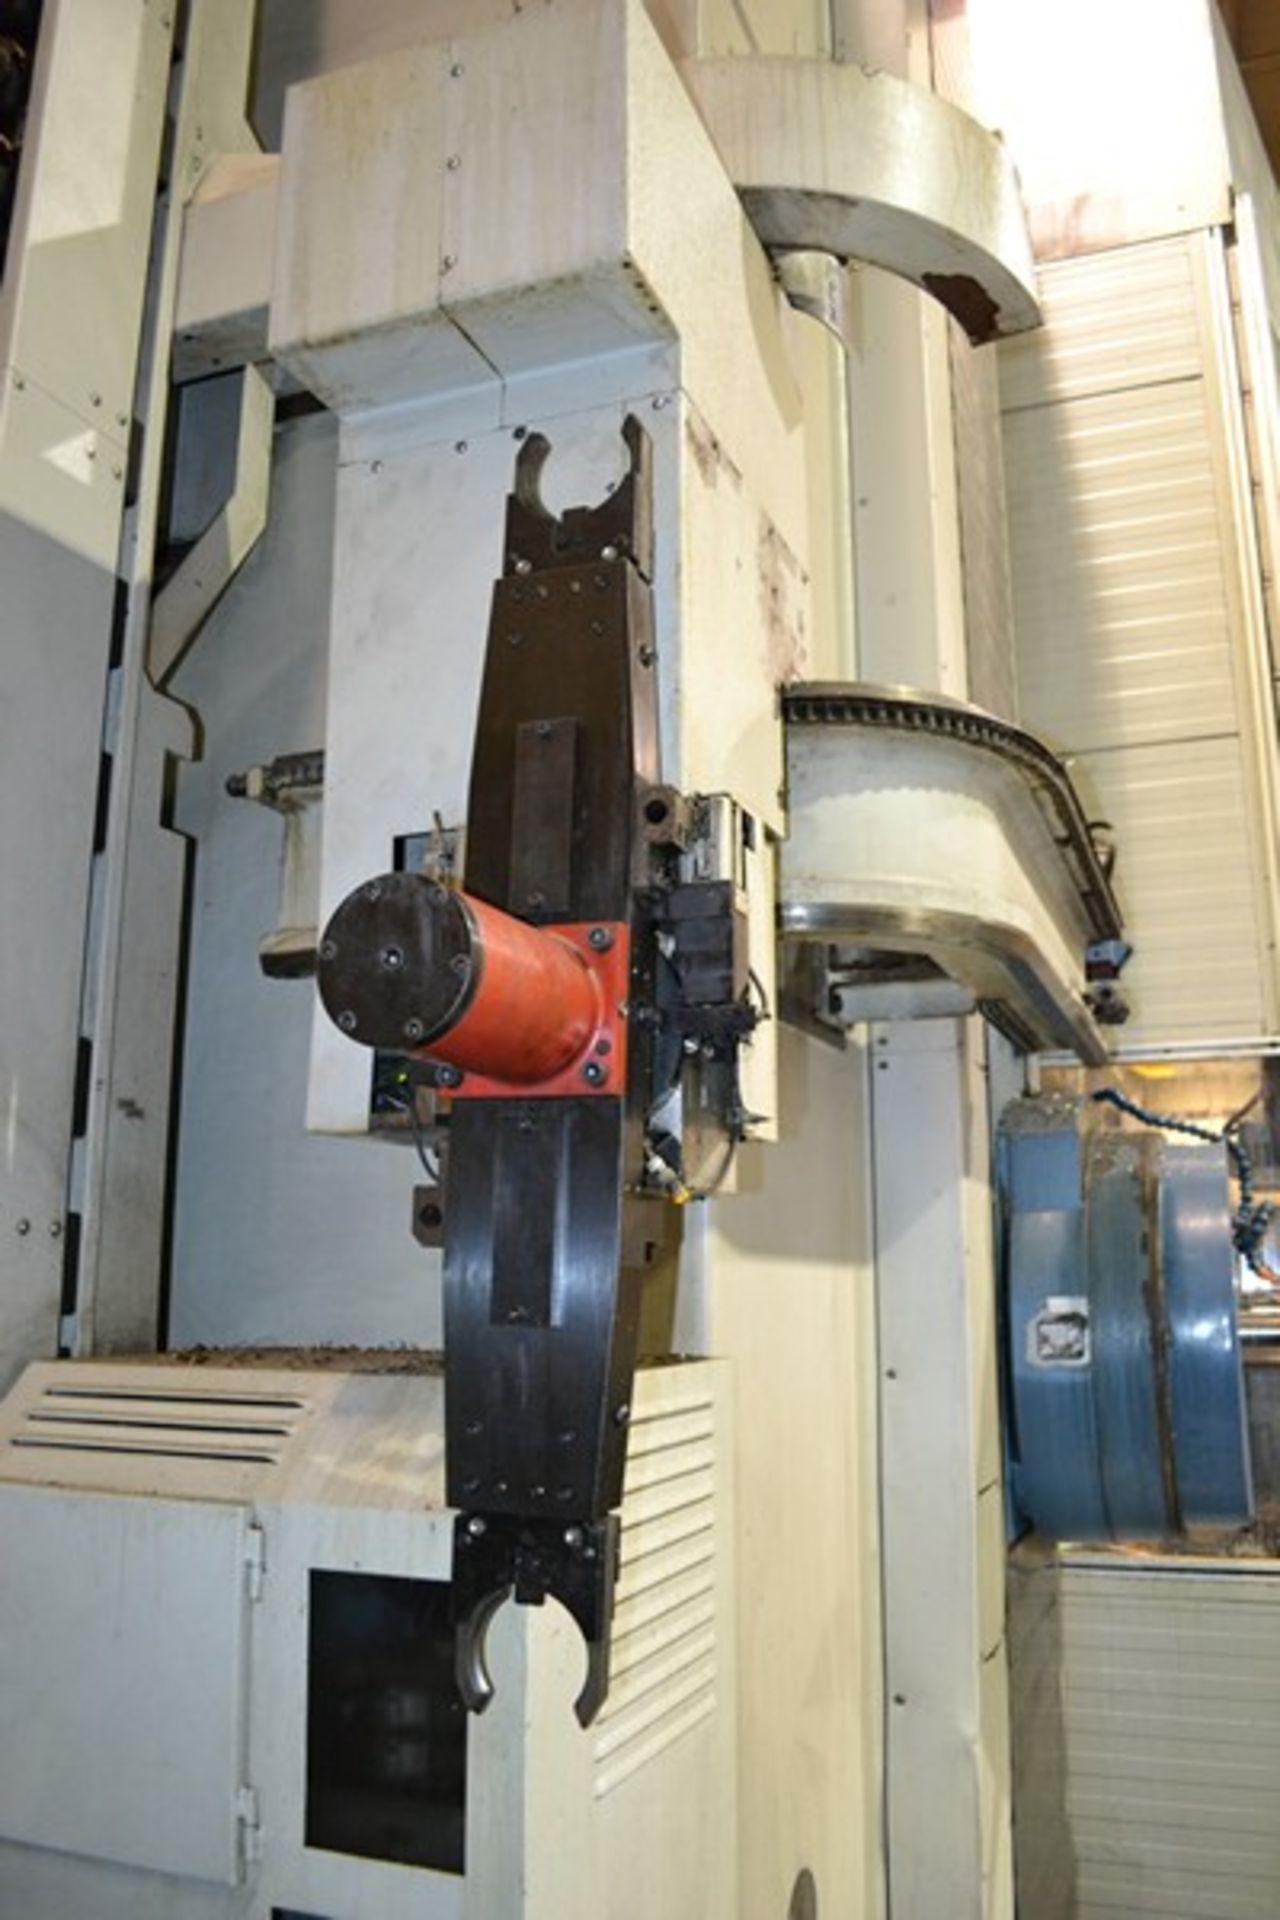 2008 Union KCU-150 HDT Horizontal Boring Mill - Image 6 of 12